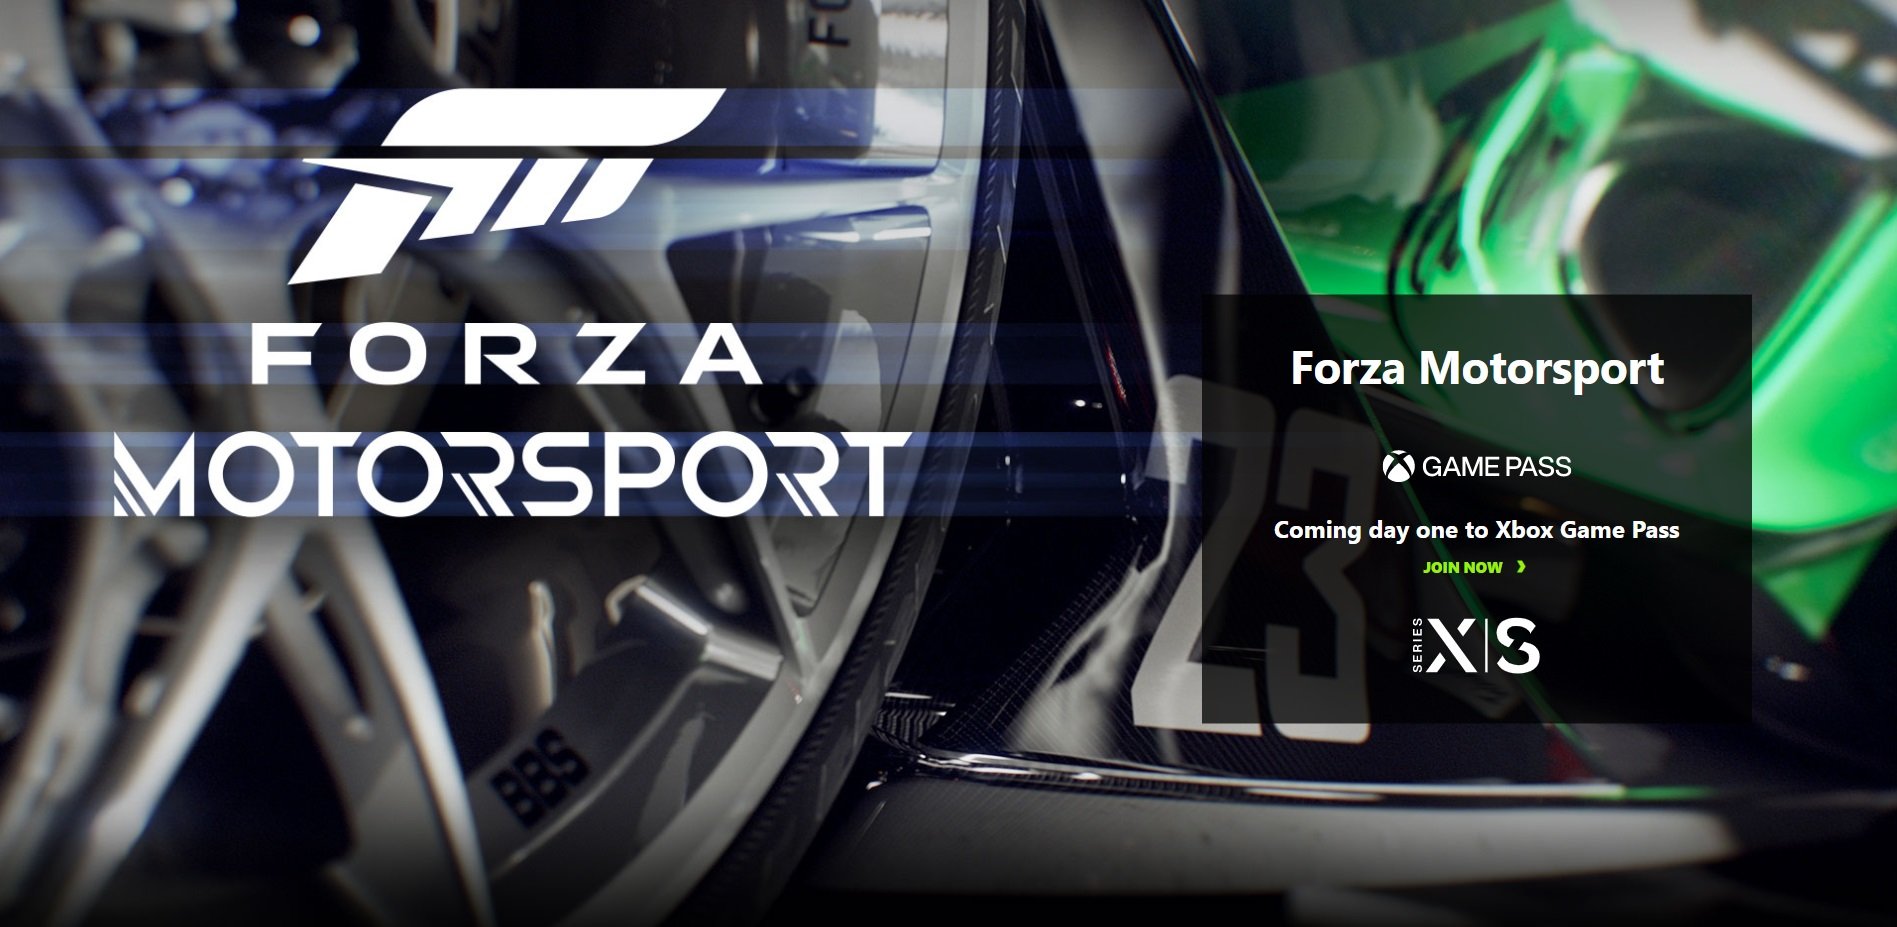 https://www.videogameschronicle.com/files/2021/04/Forza-Motorsport-b.jpg